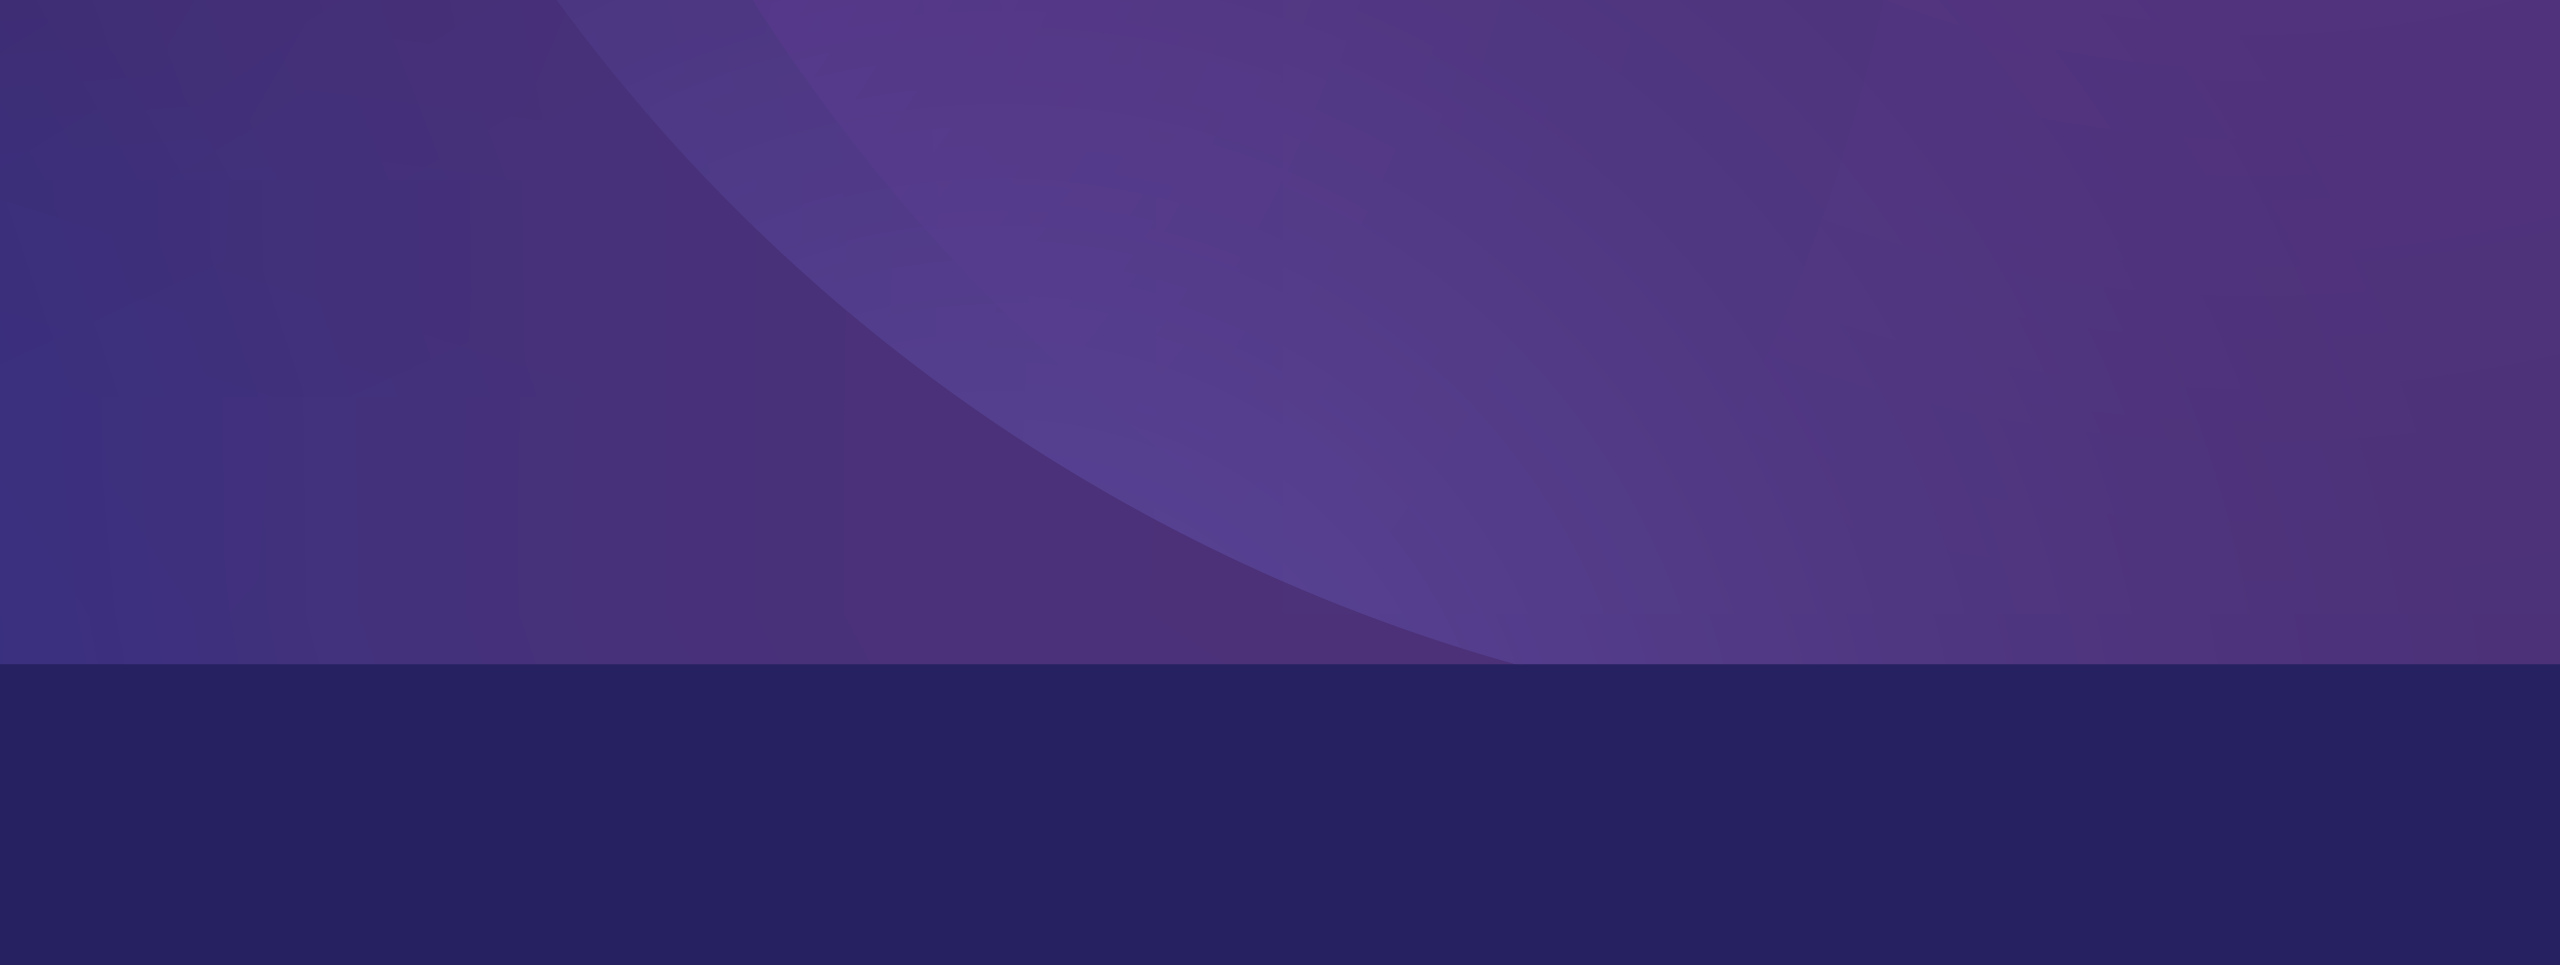 purple decorative box